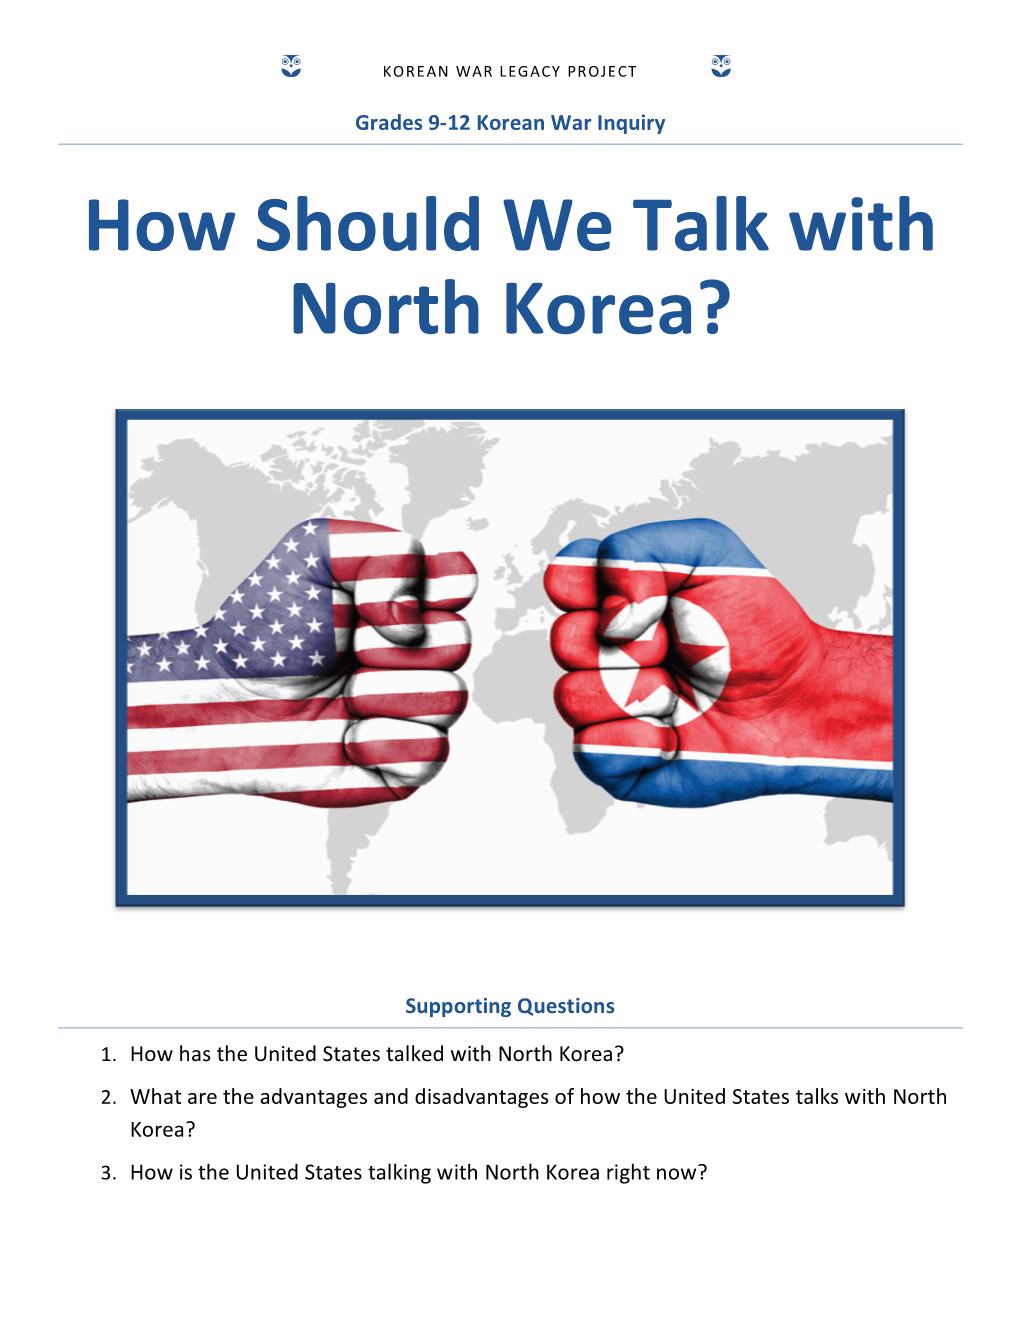 How Should We Talk with North Korea?